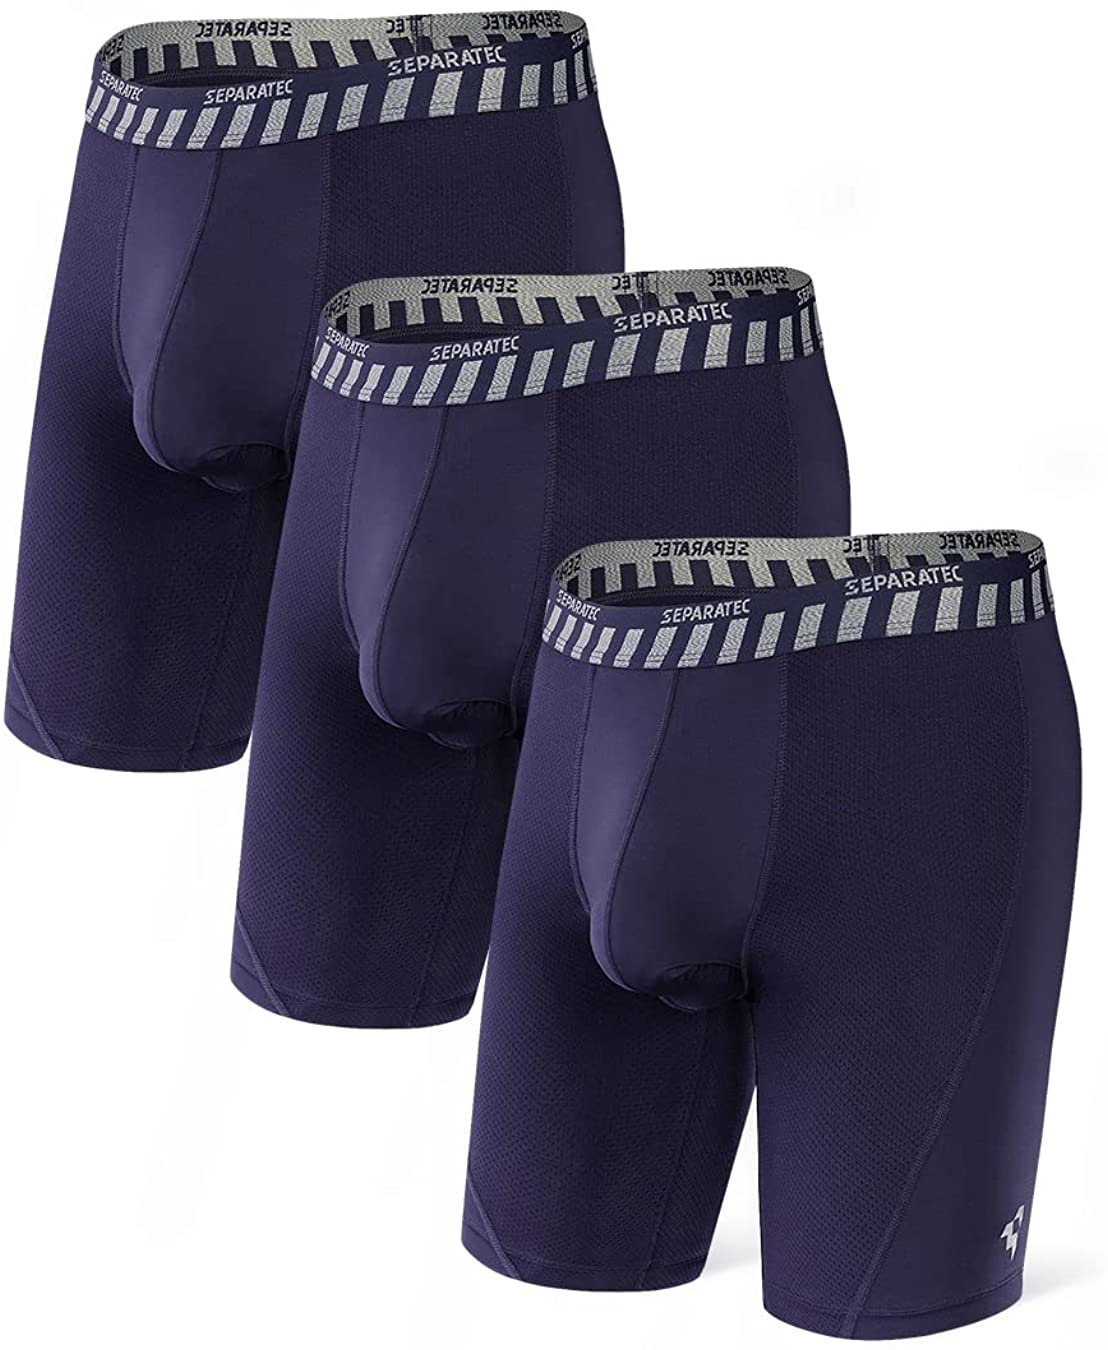 Buy Separatec Men's Dual Pouch Underwear Lightweight Sport